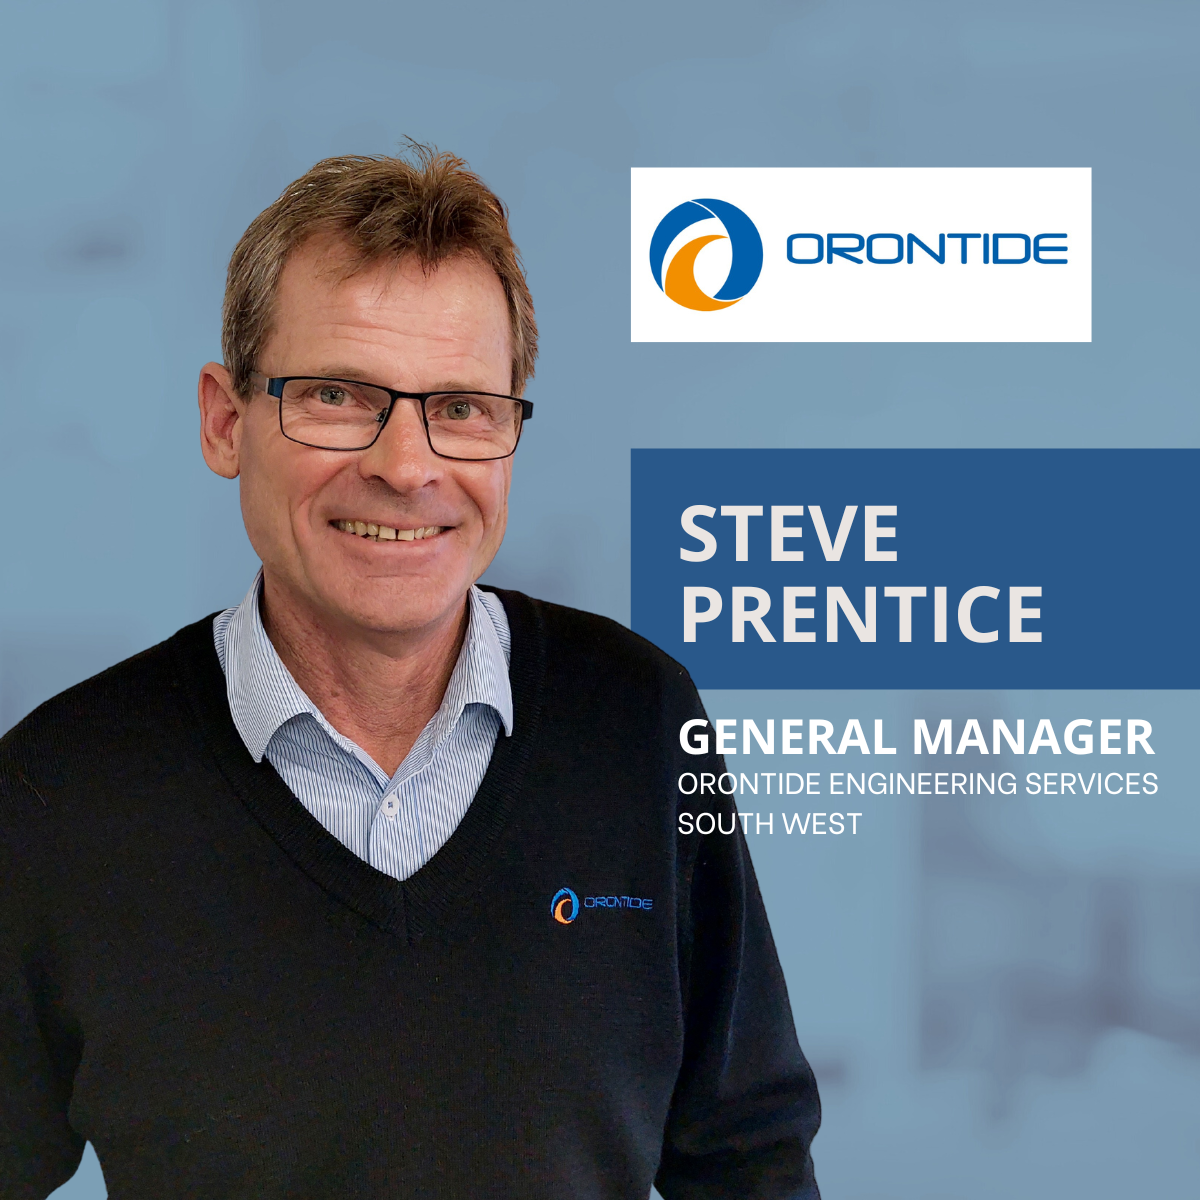 Steve Prentice's 35 Year Career at Orontide